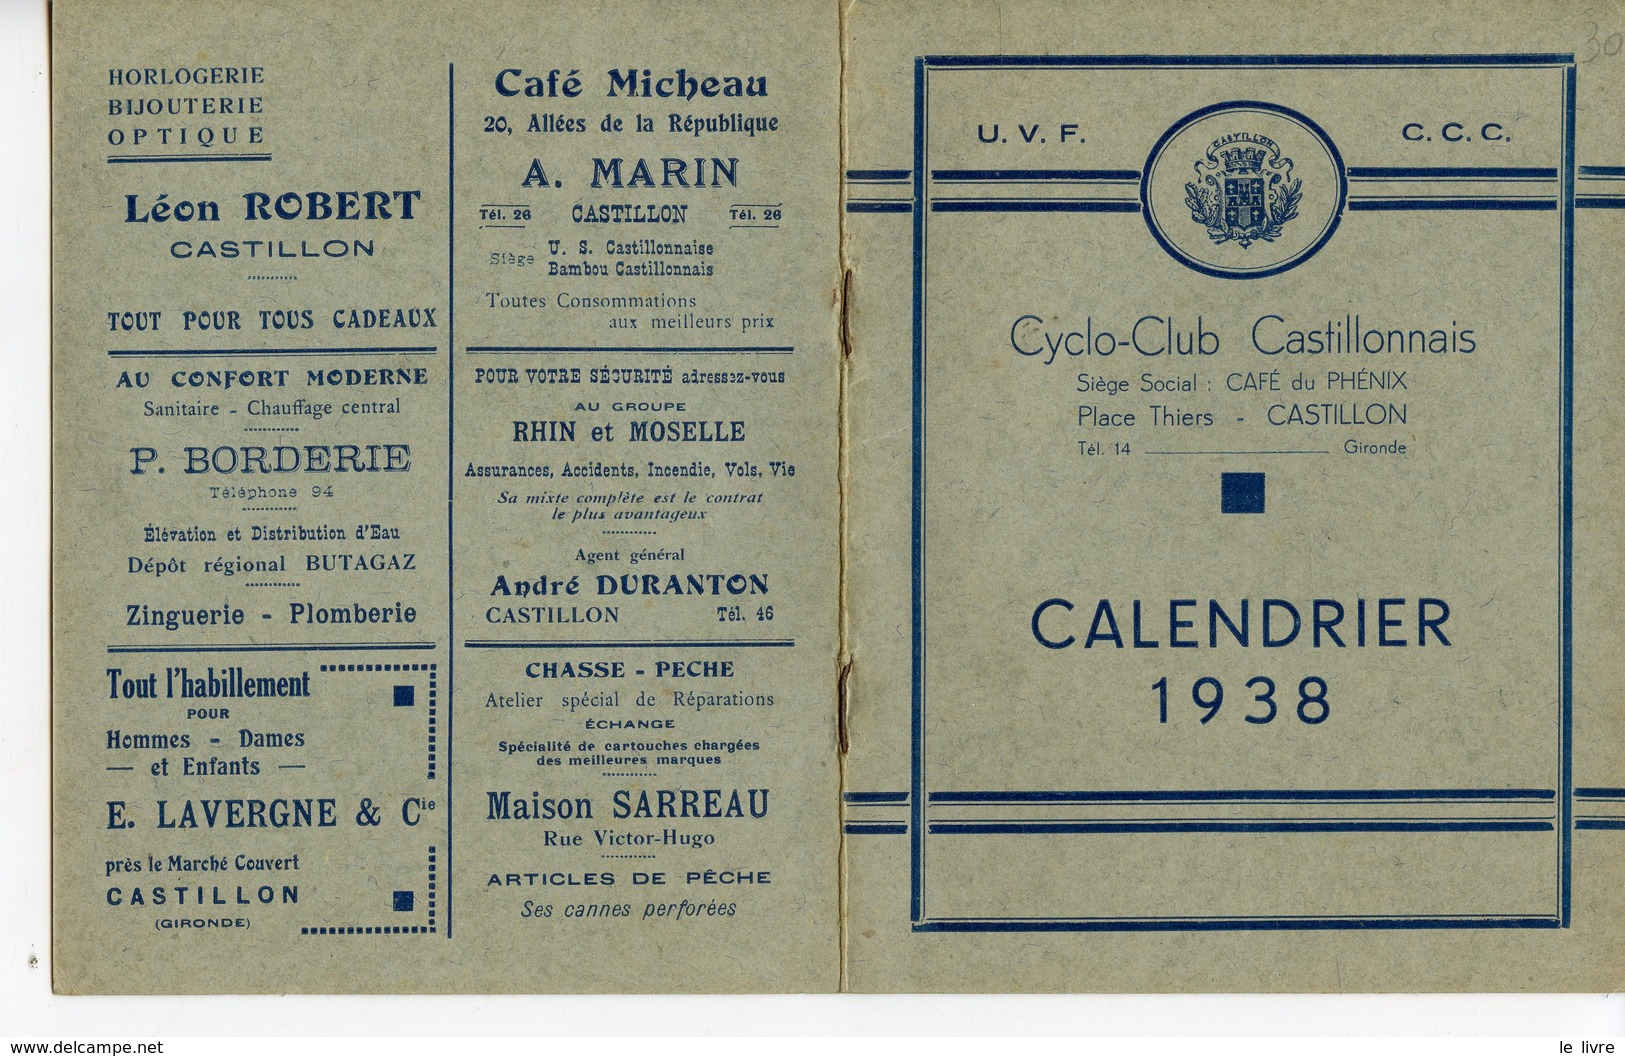 BROCHURE CALENDRIER 1938 DU CYCLO-CLUB CASTILLONNAIS. CAFE DU PHENIX. CASTILLON (33)